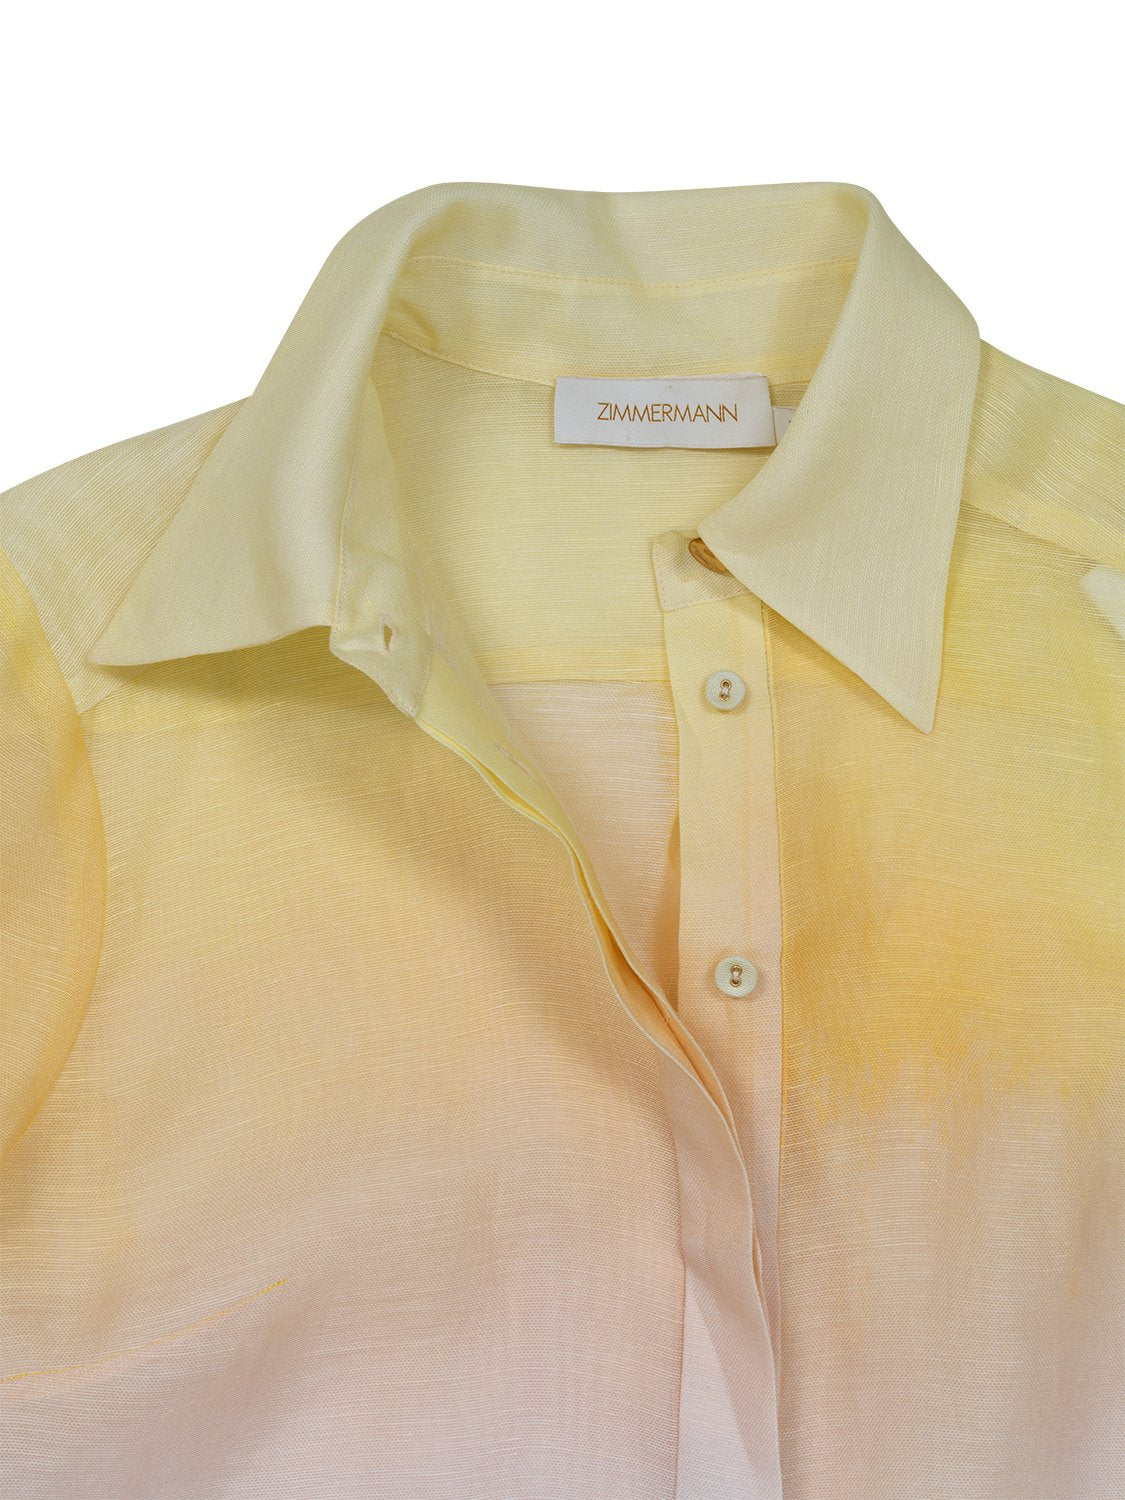 Harmony Body Shirt - Yellow Fields